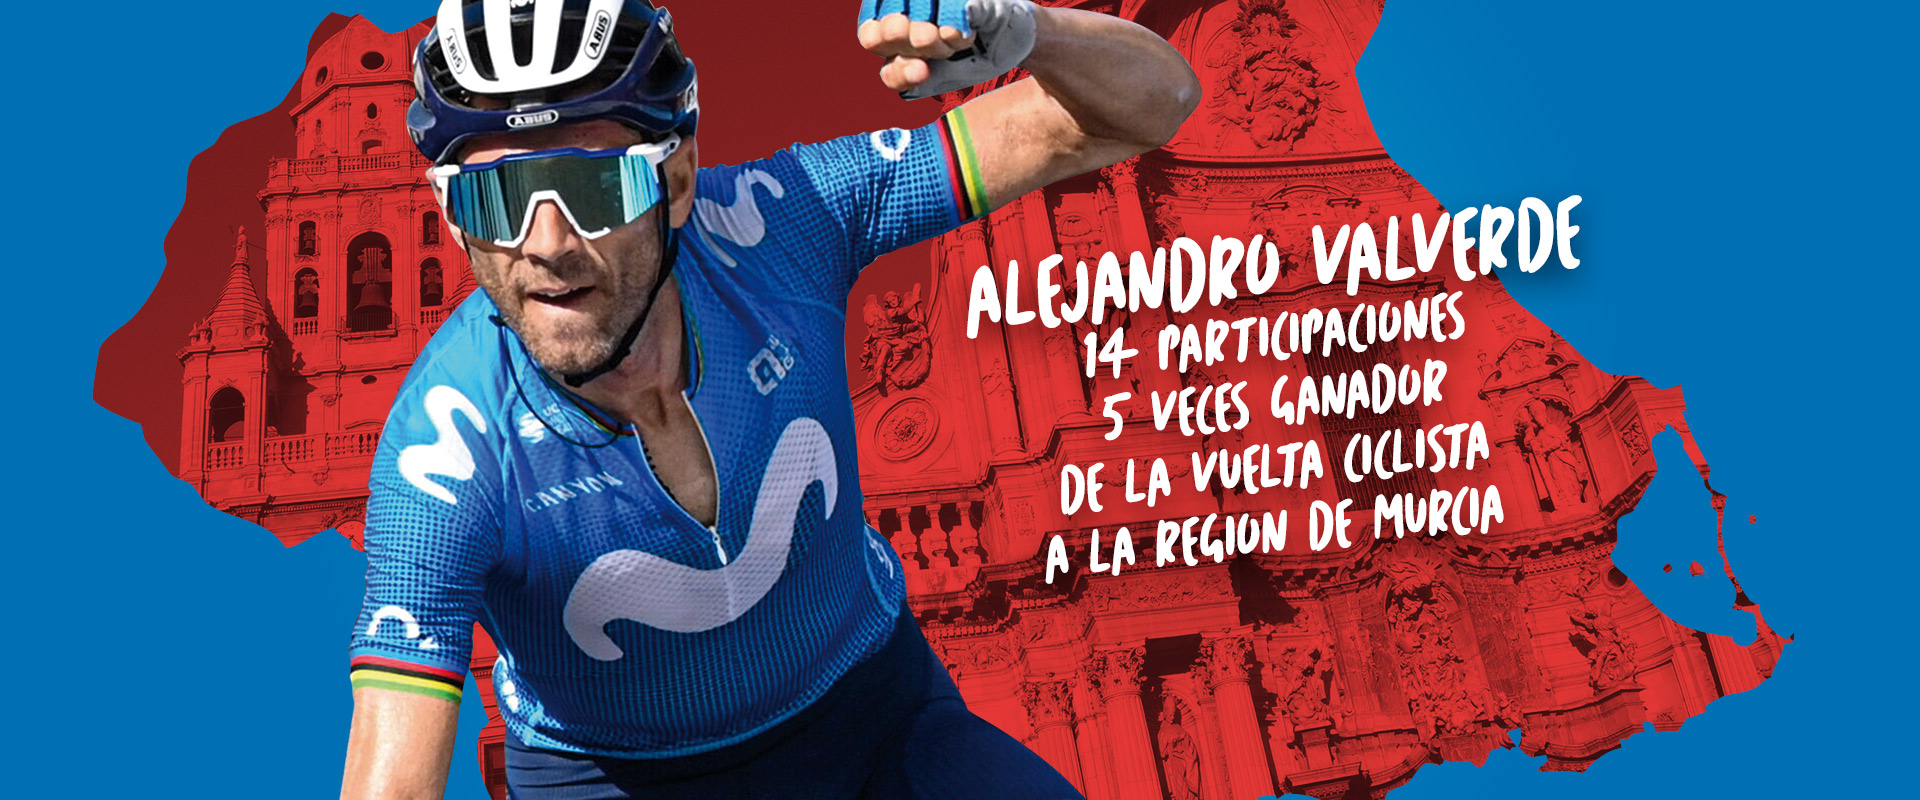 Inicio | Vuelta Ciclista Murcia